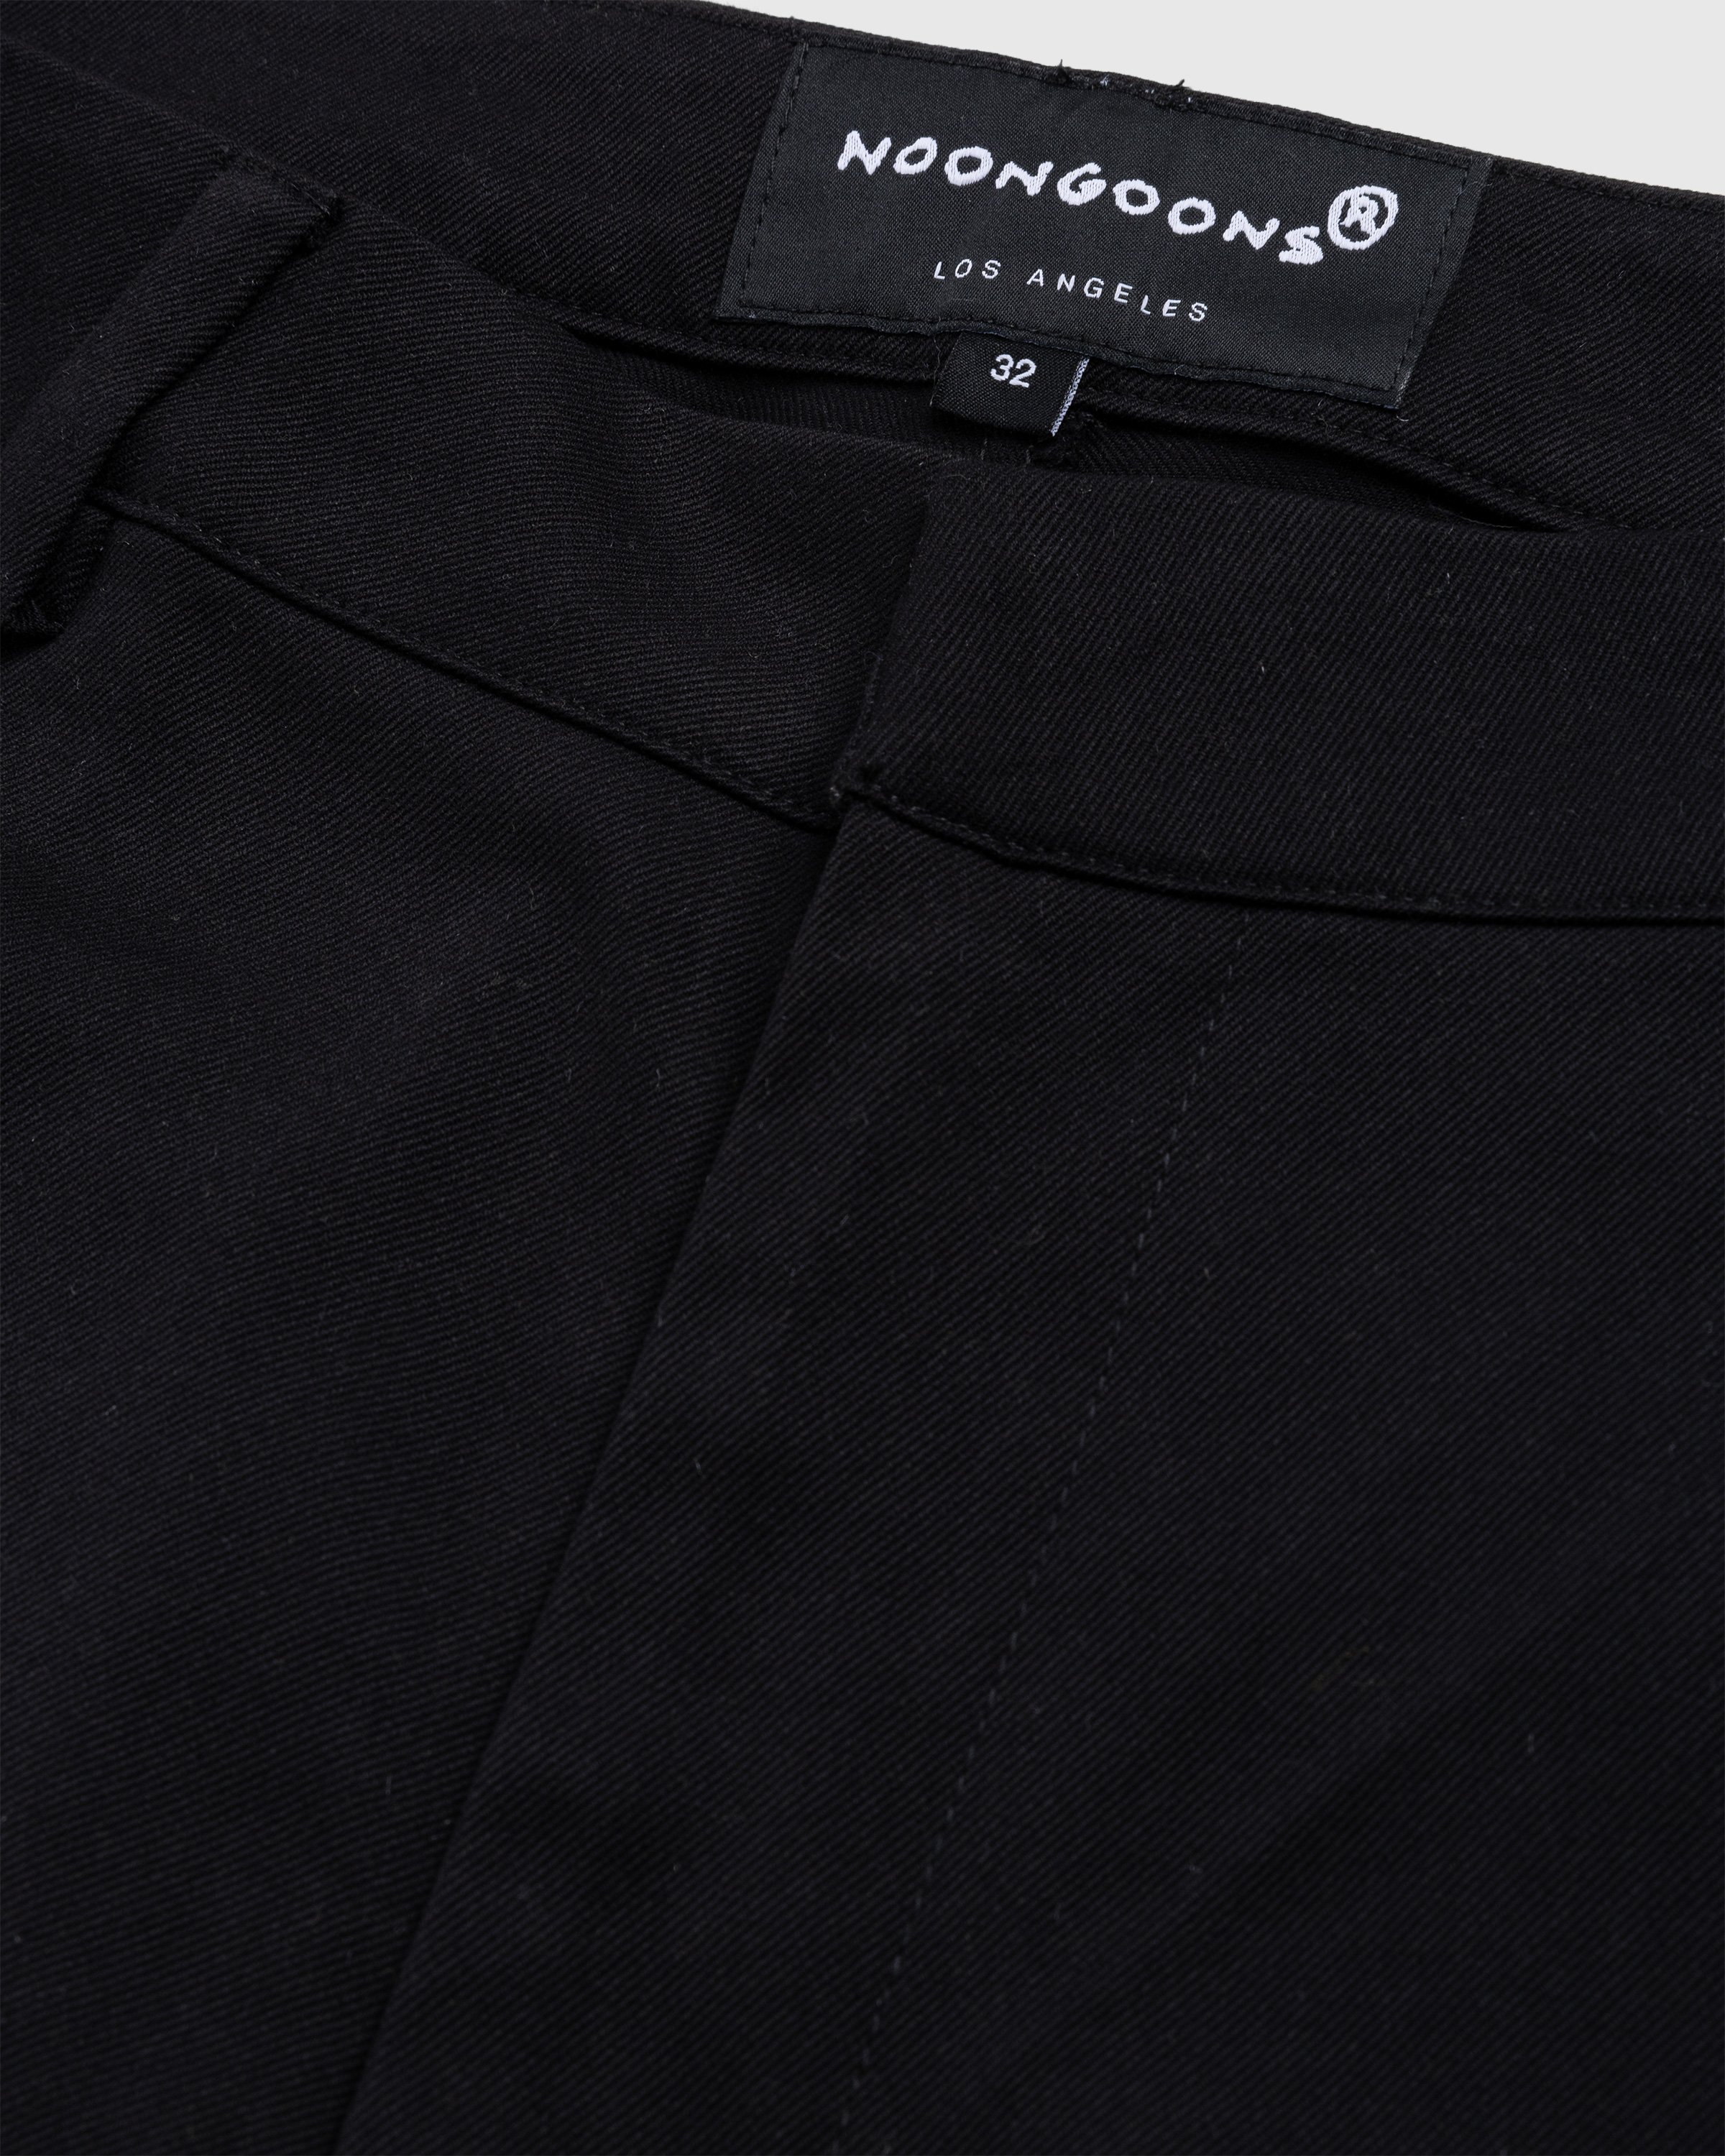 Noon Goons - Profile Pant Black - Clothing - Black - Image 4